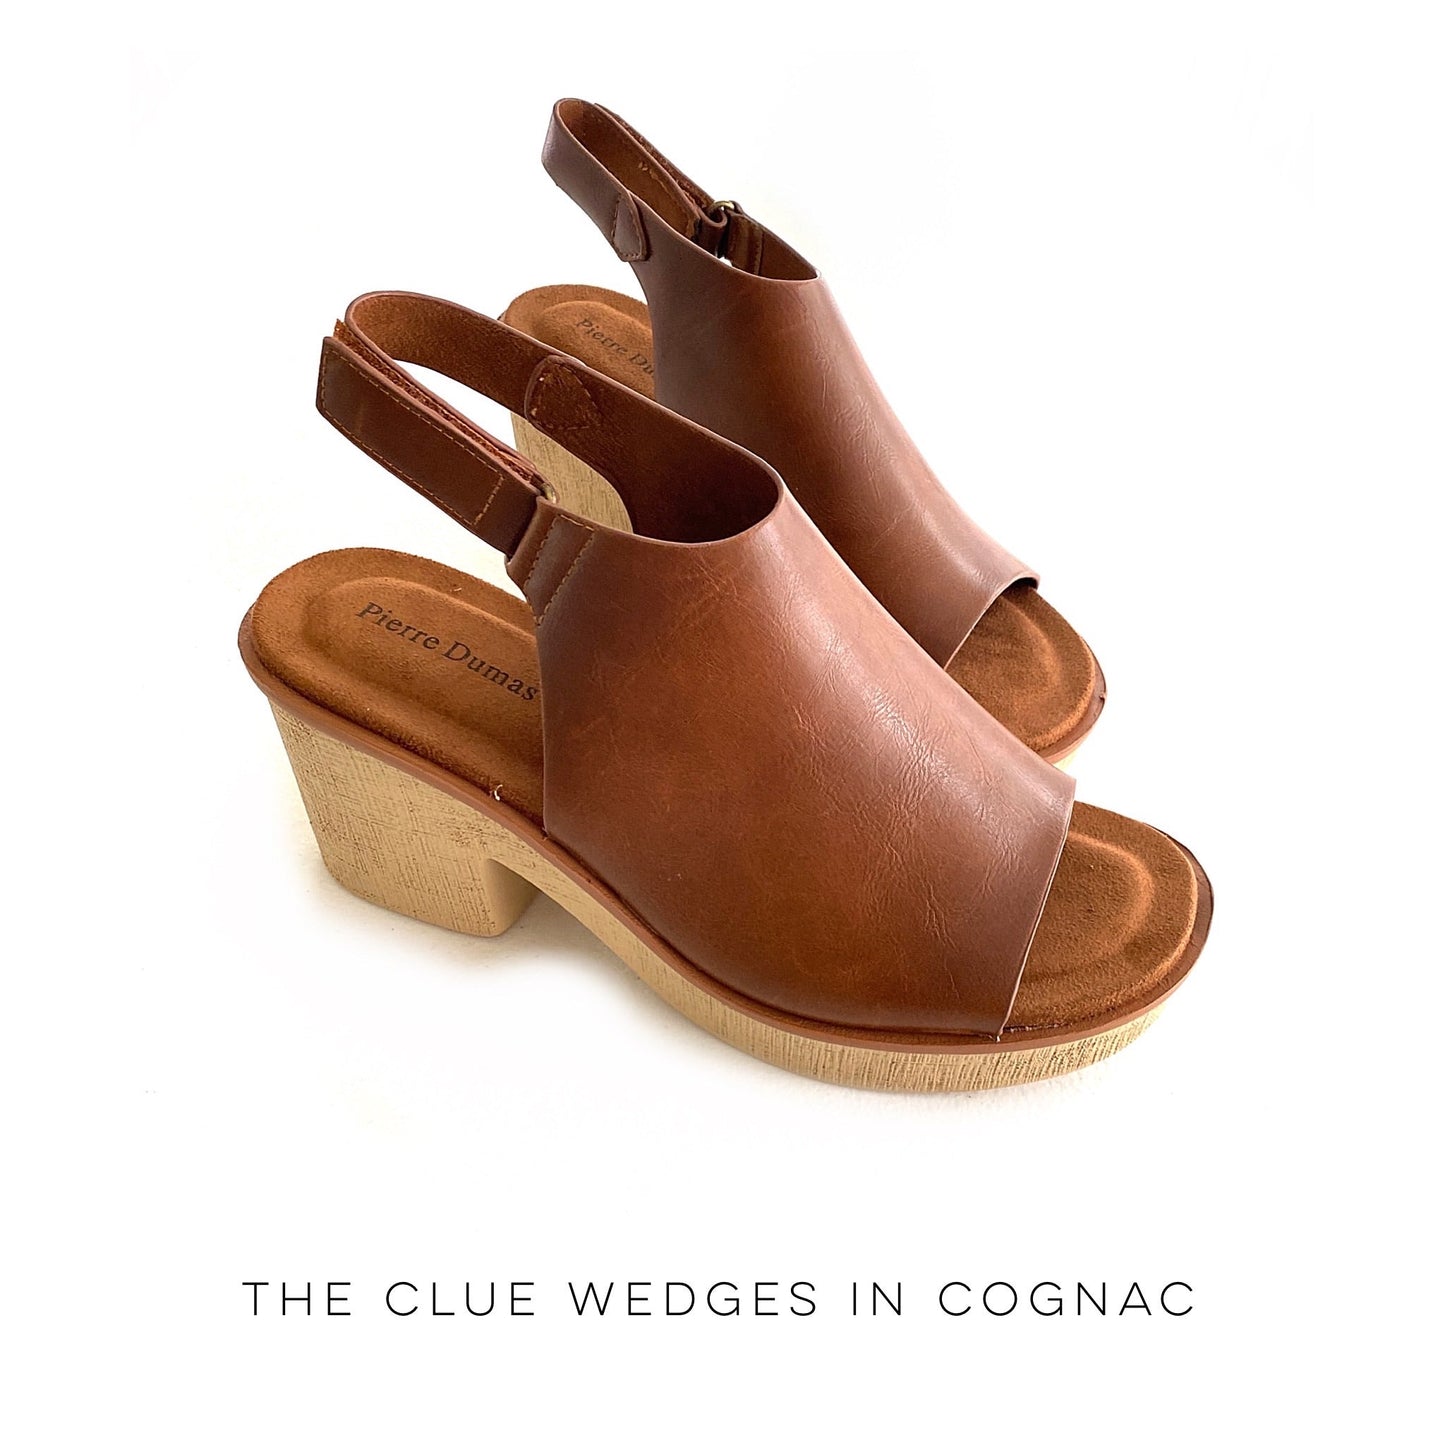 The Clue Wedges in Cognac